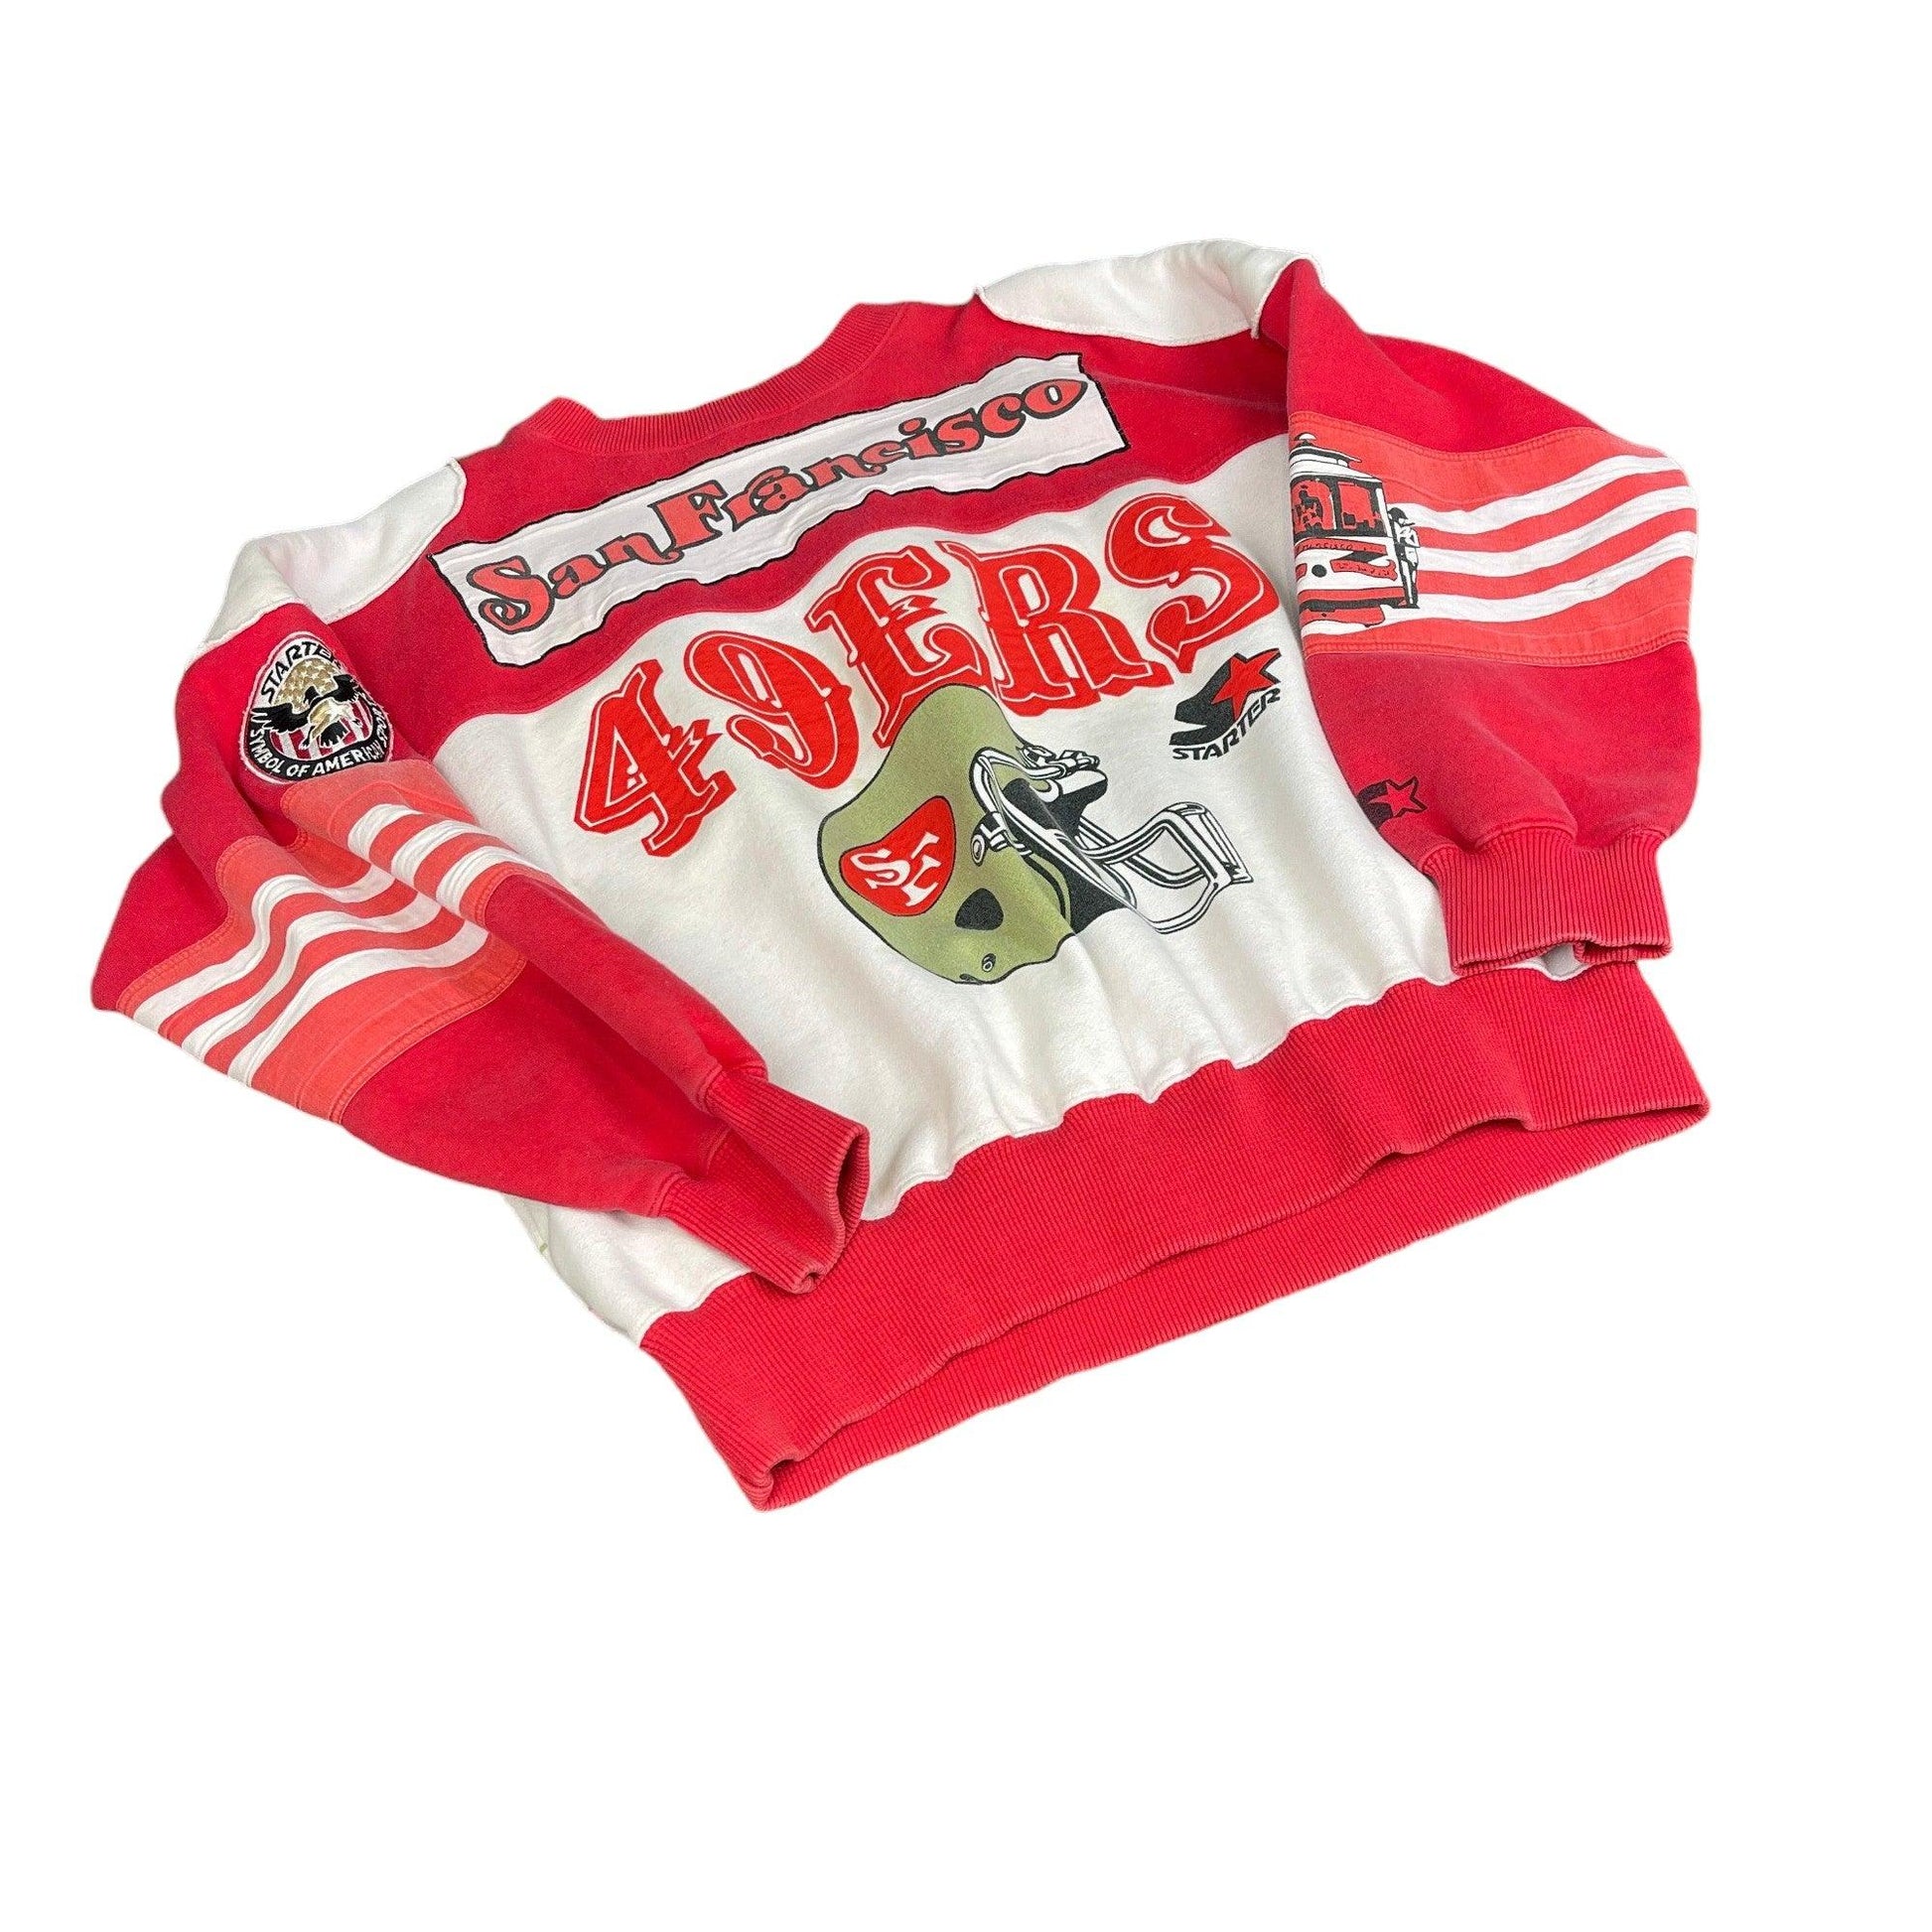 Vintage 90s Red + White Starter San Francisco 49ers Sweatshirt - Large - The Streetwear Studio